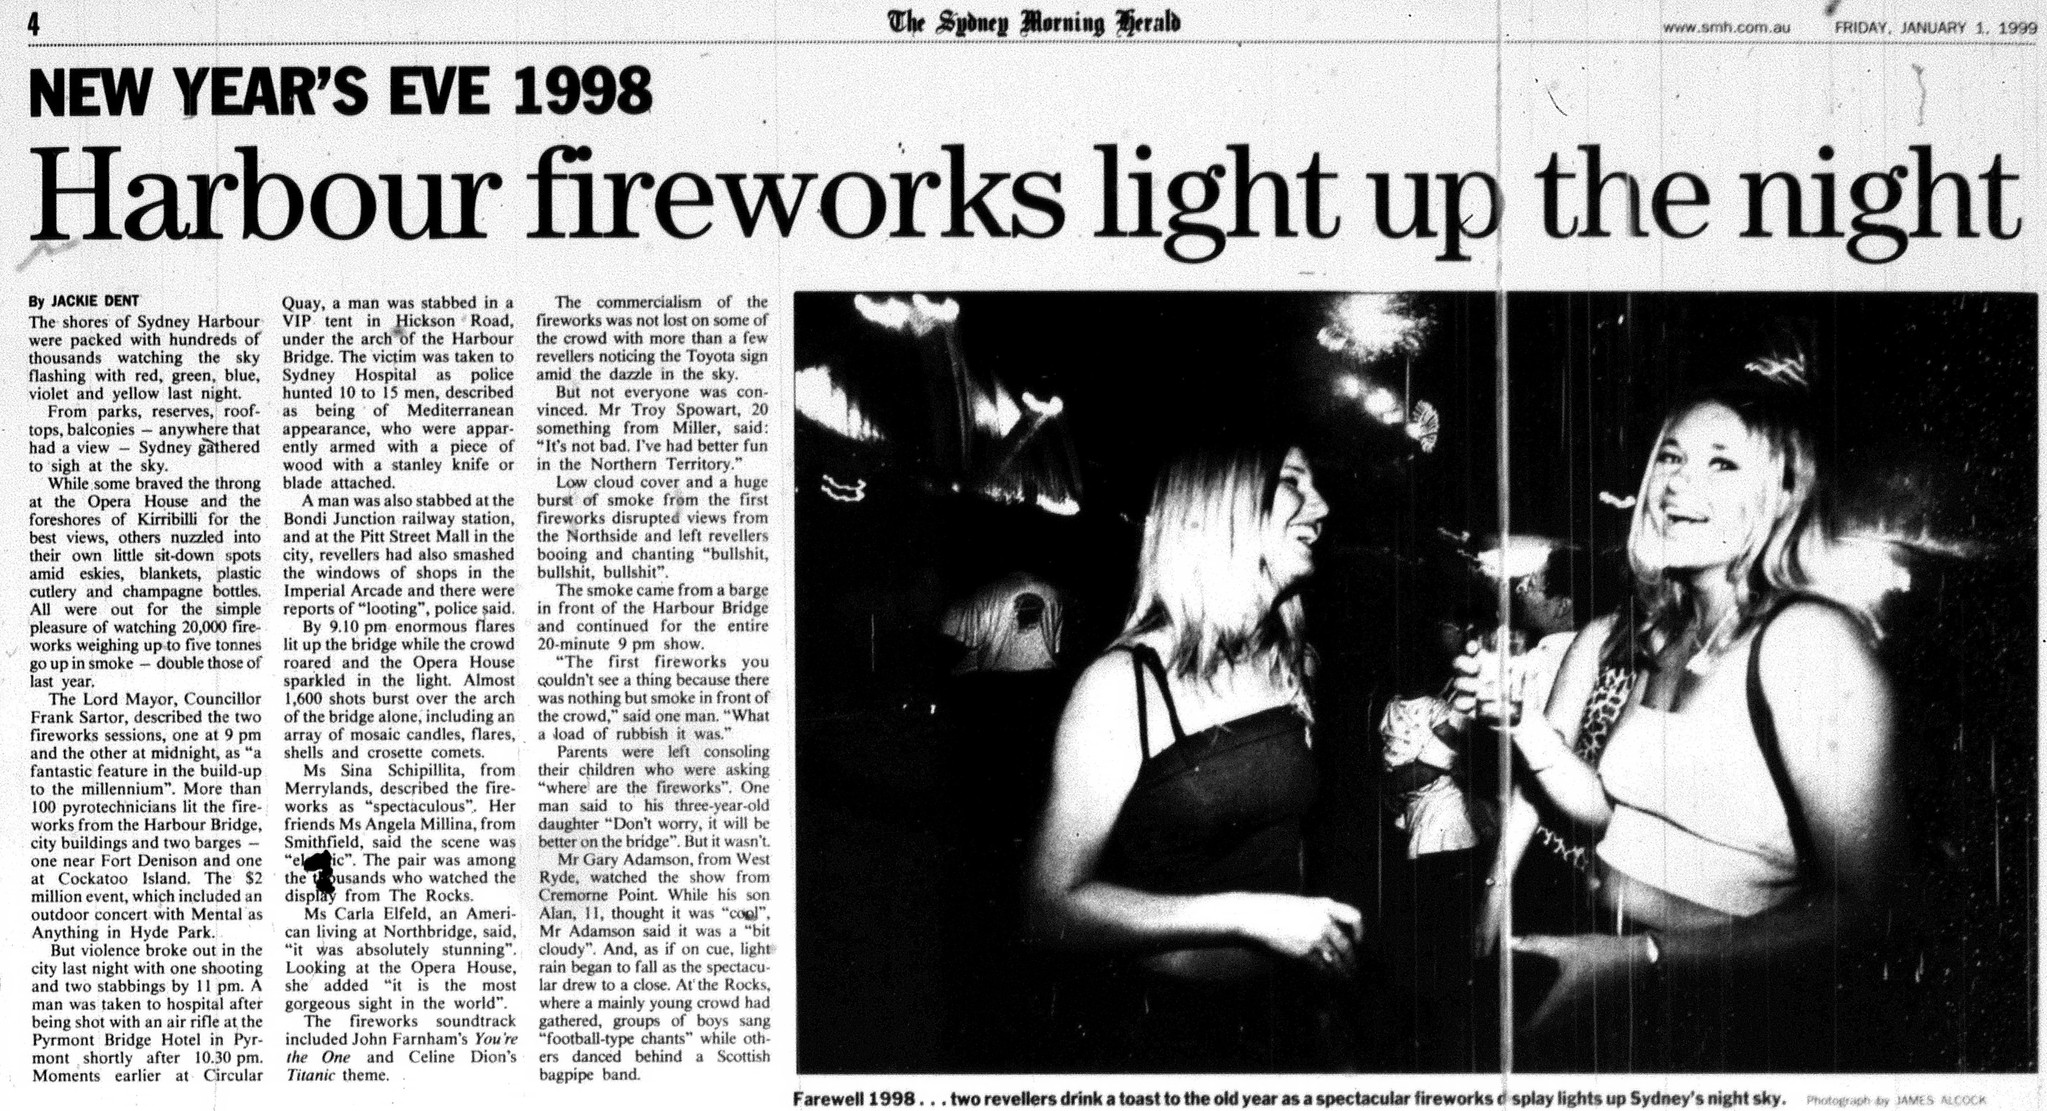 Sydney NYE January 1 1999 SMH 4 - harbour fireworks light up the night